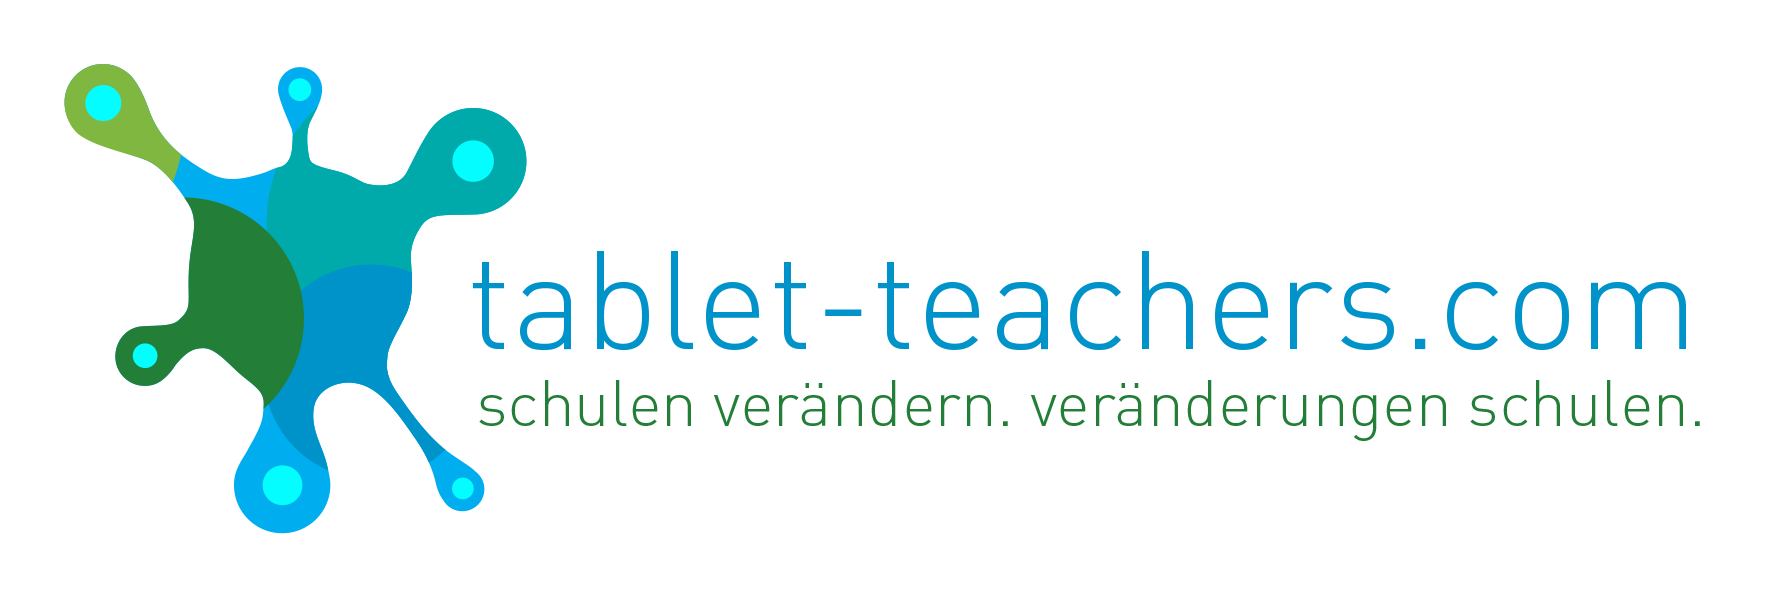 www.tablet-teachers.com